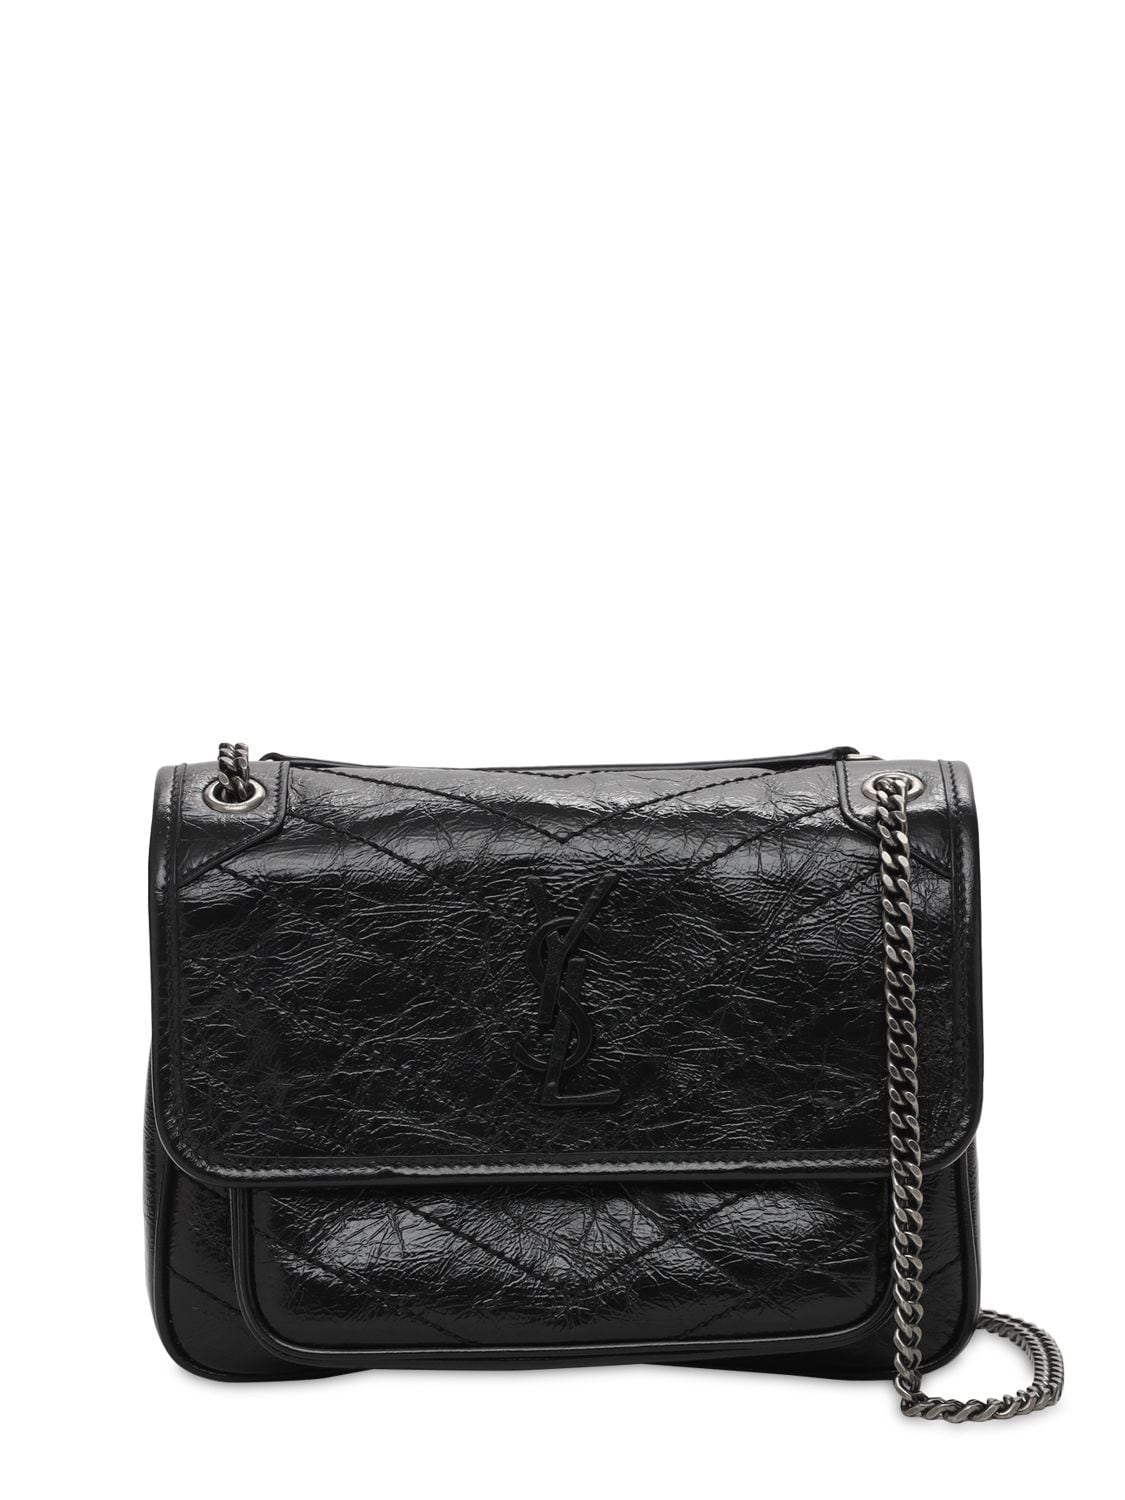 Saint Laurent Niki Monogram Vintage Effect Leather Bag In Black